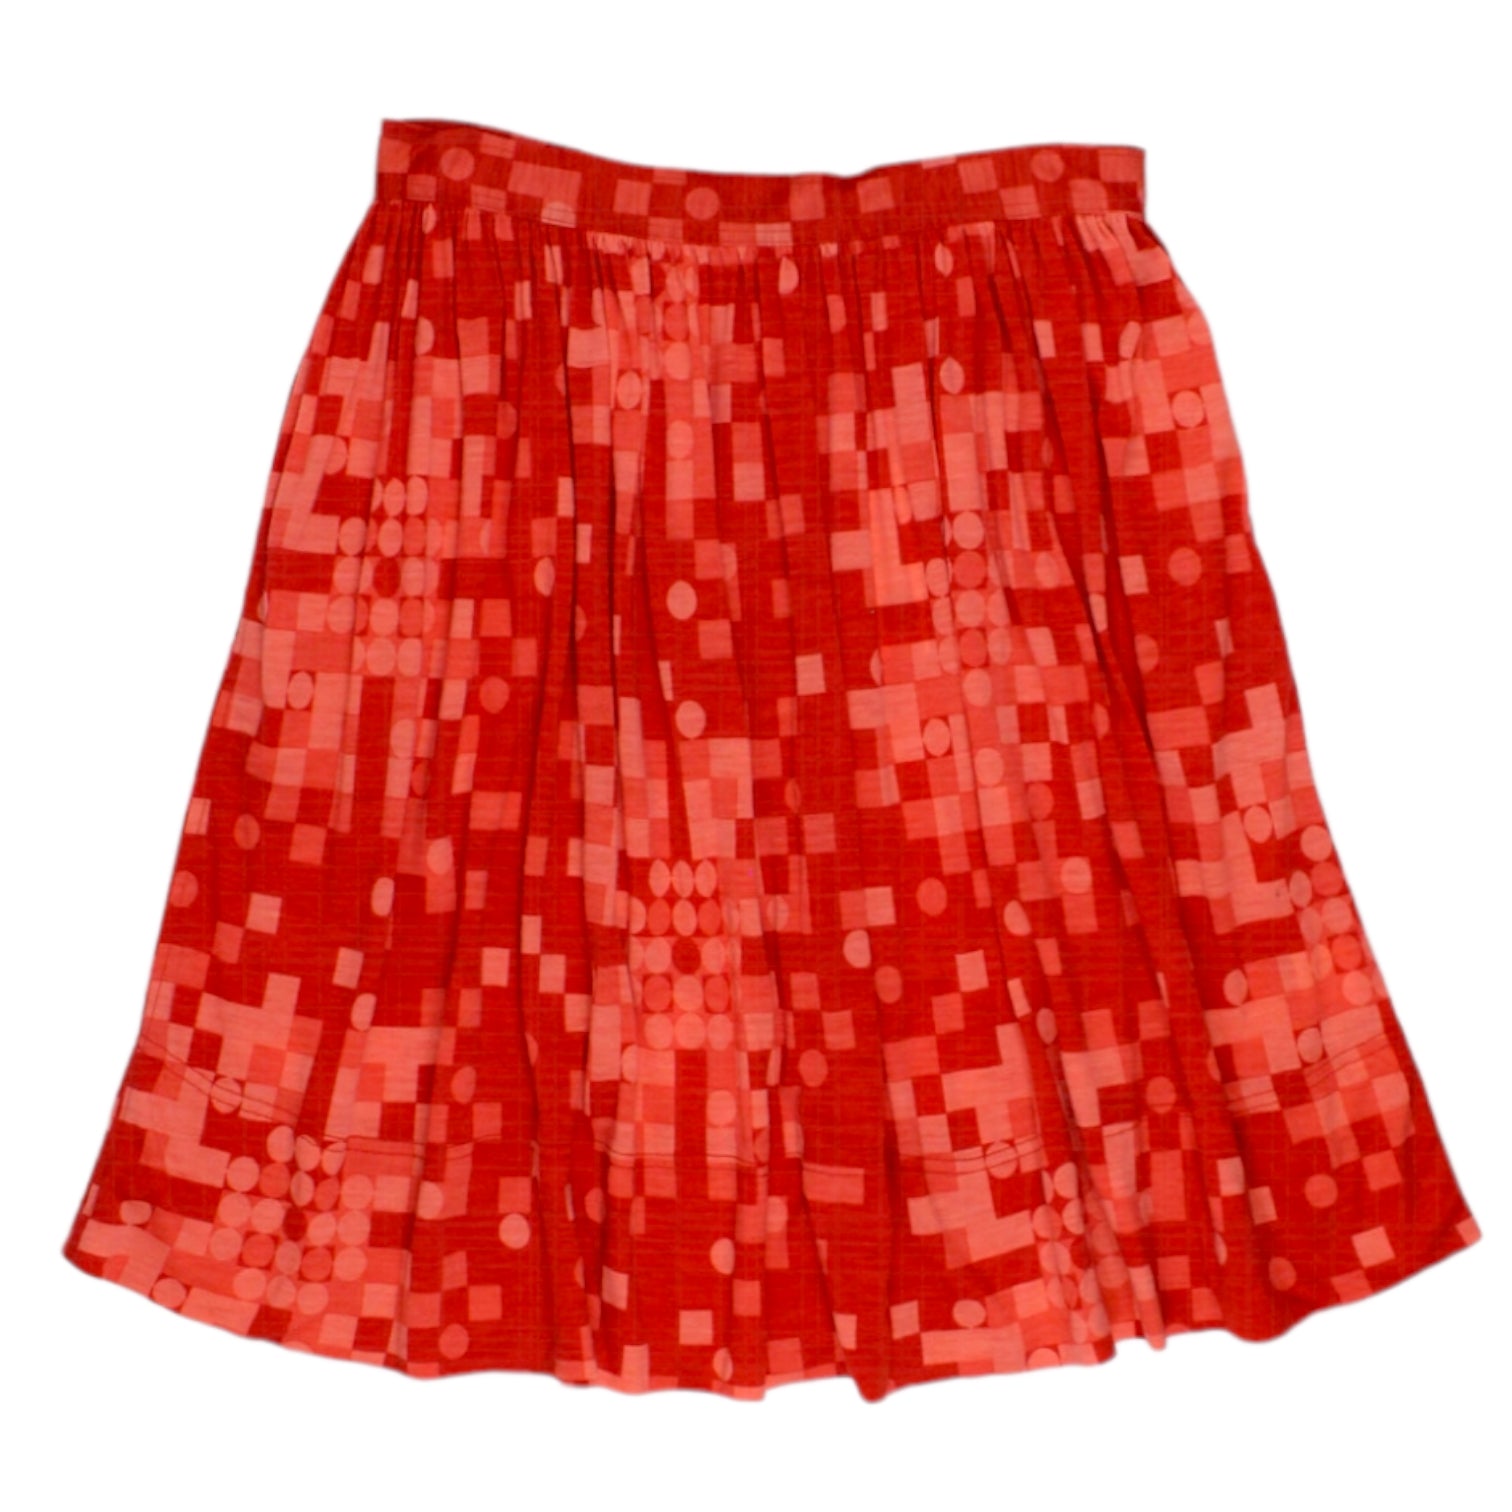 Orla Kiely Pink Square/Circle Wool Jersey Skirt